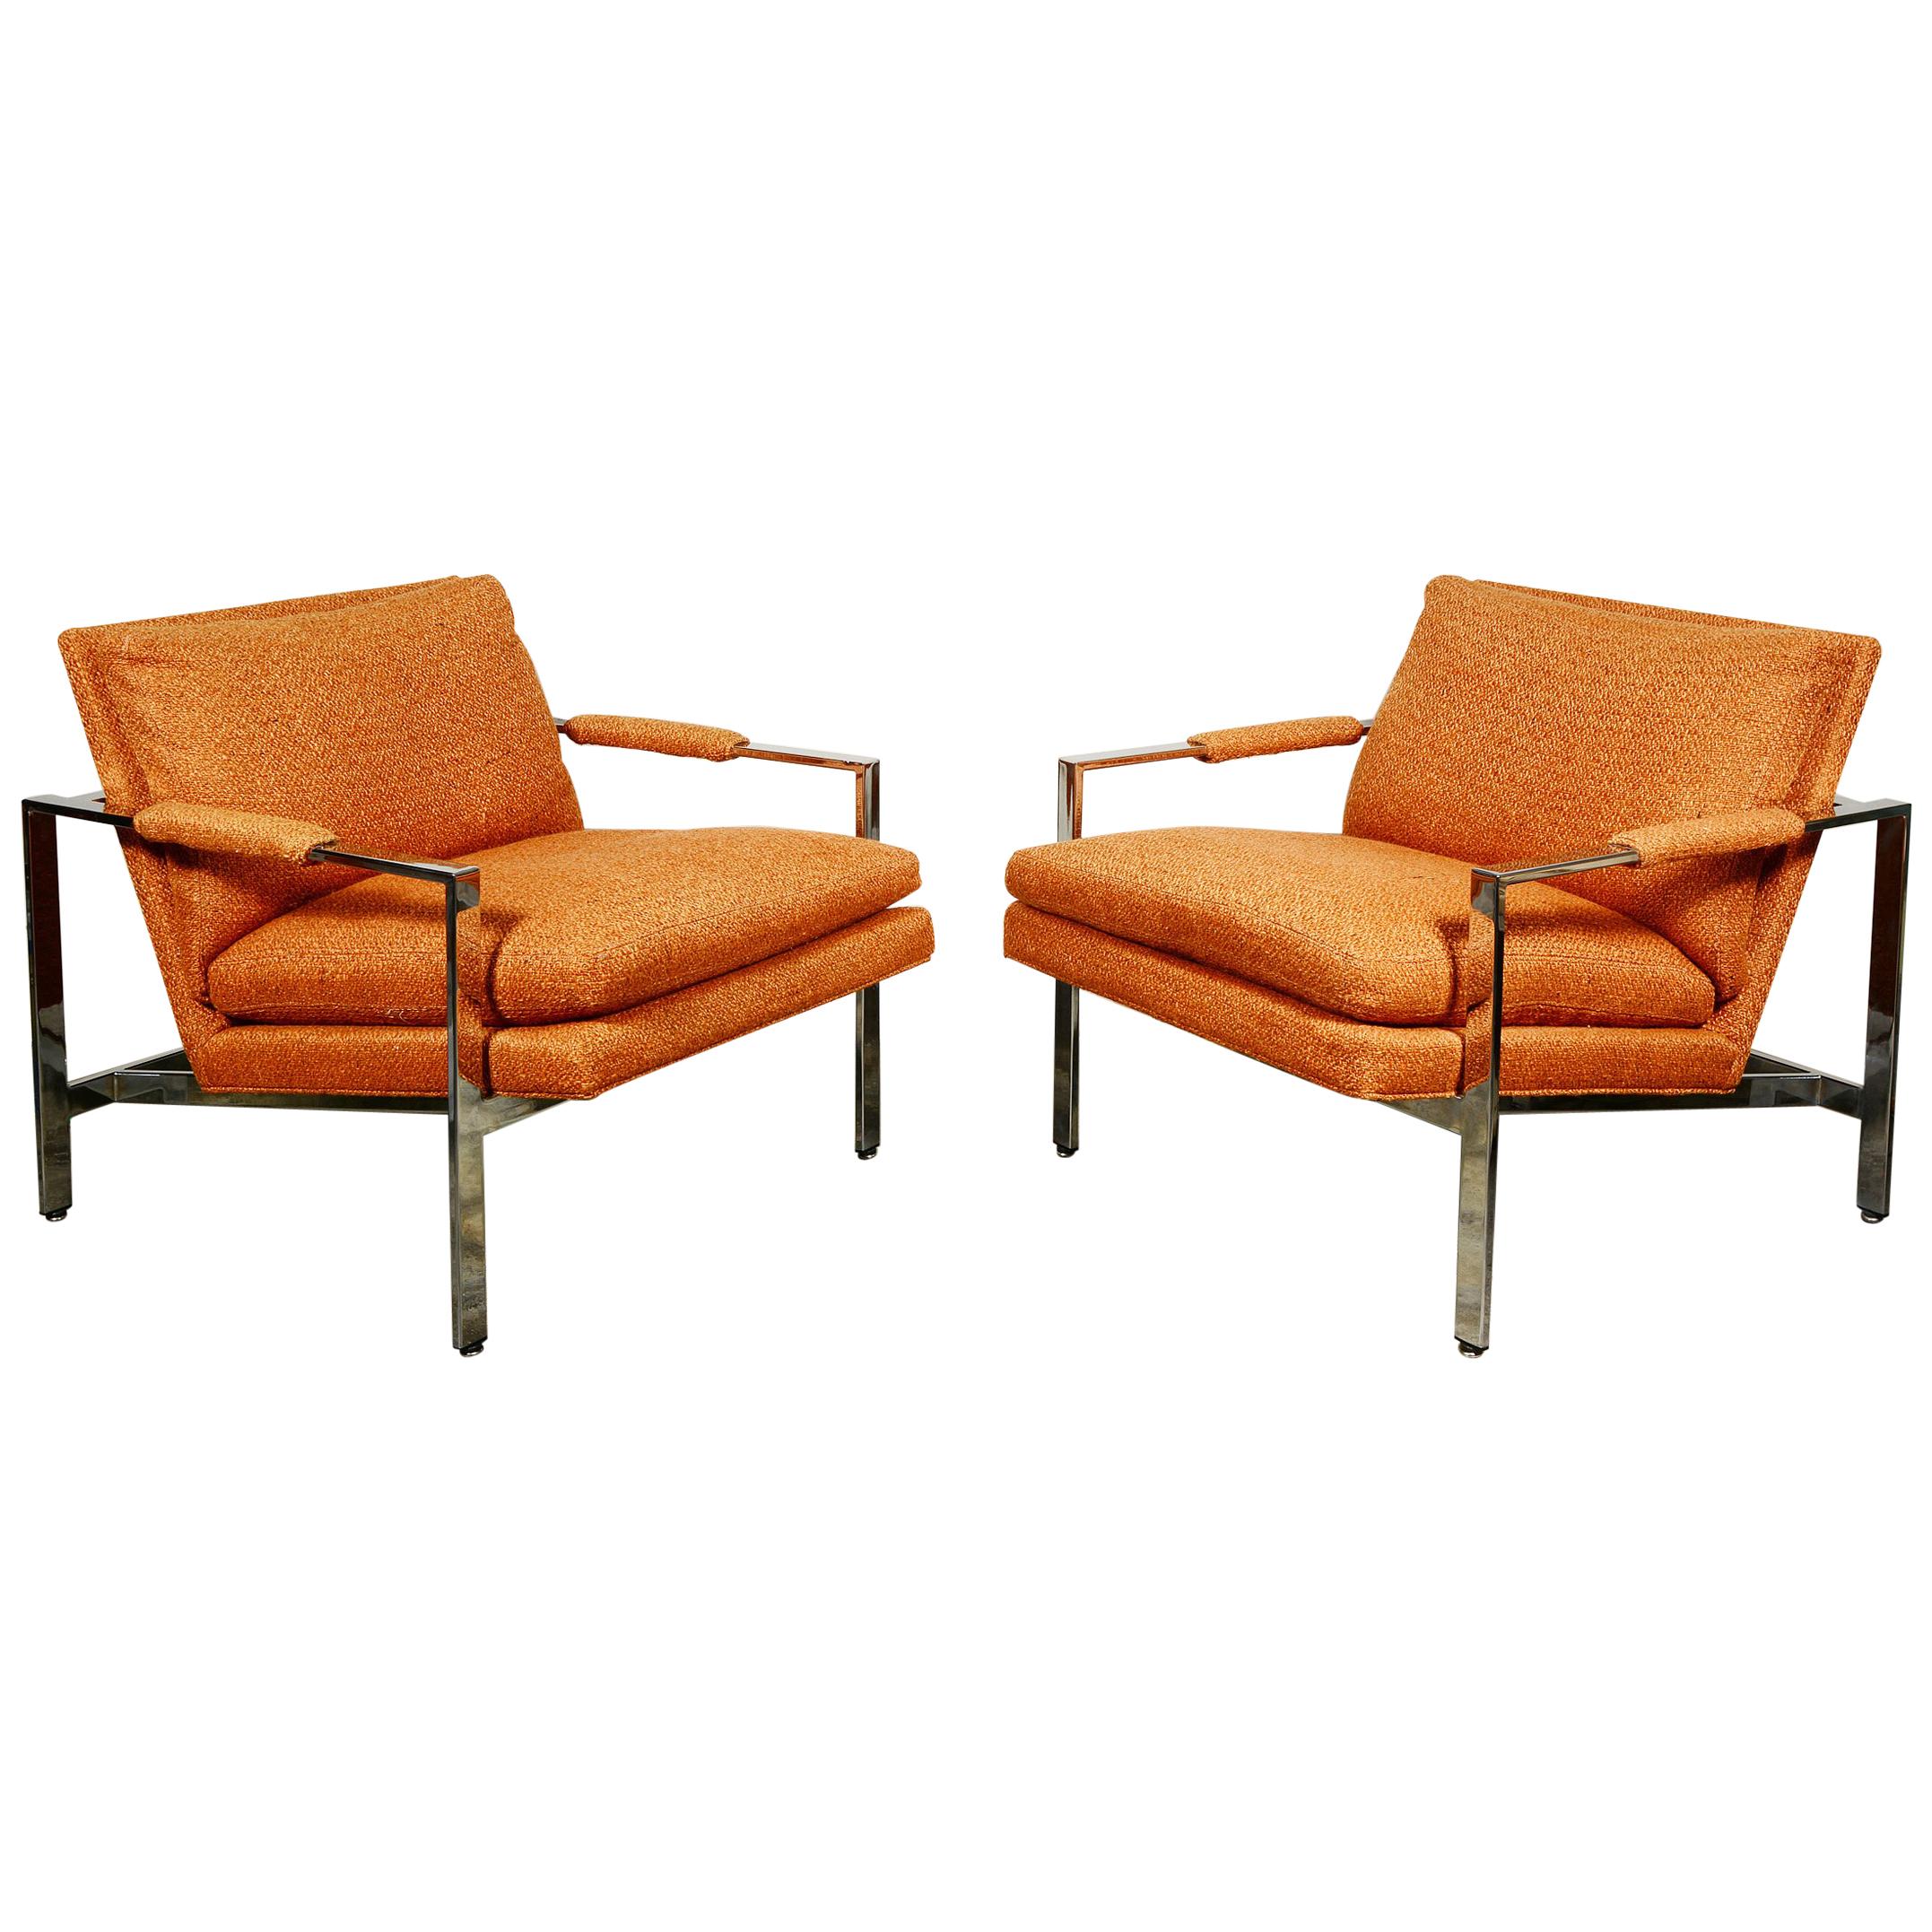 Pair of Milo Baughman Flat Chrome Bar Lounge Chairs